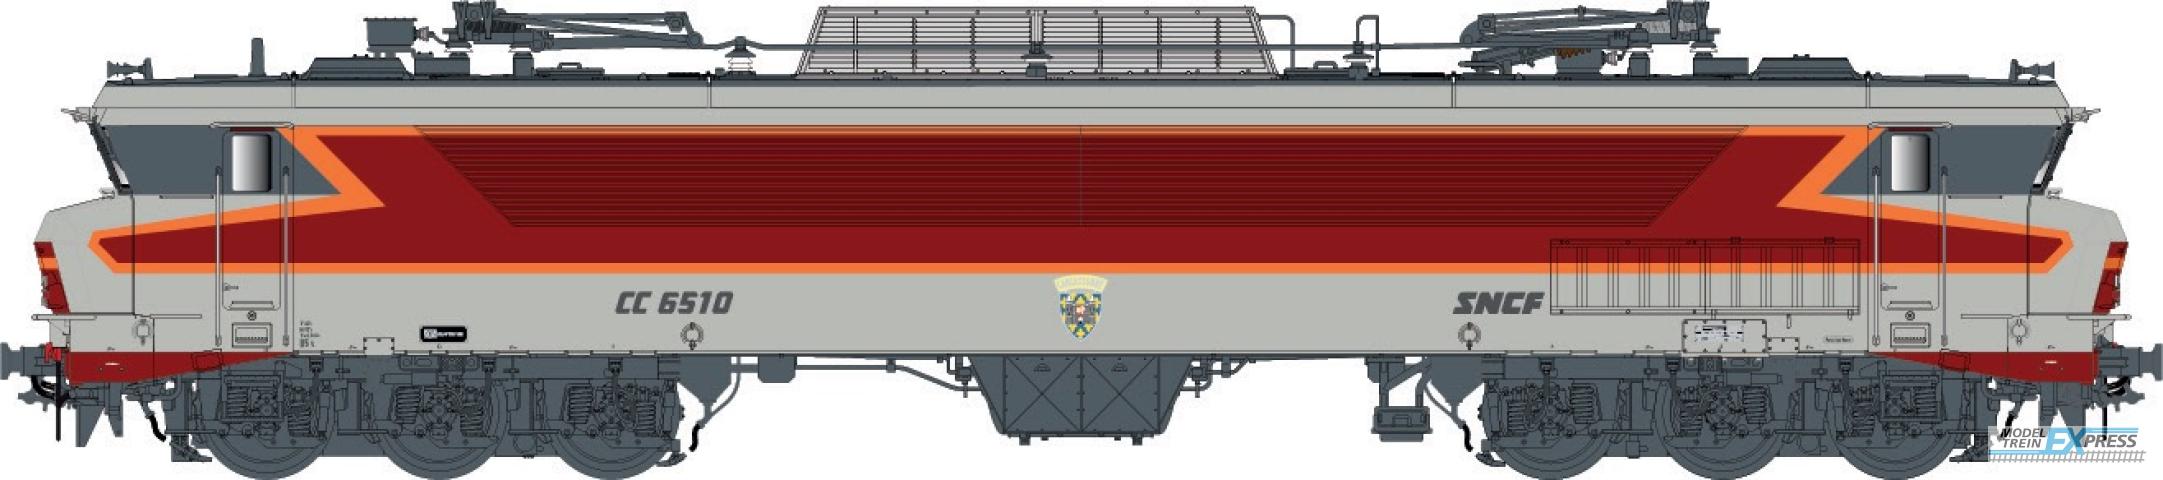 LS Models 10334S CC 6510, grey/red/orange, livery ARZENS, logo RMT  /  Ep. IV-V  /  SNCF  /  HO  /  DC SOUND  /  1 P.